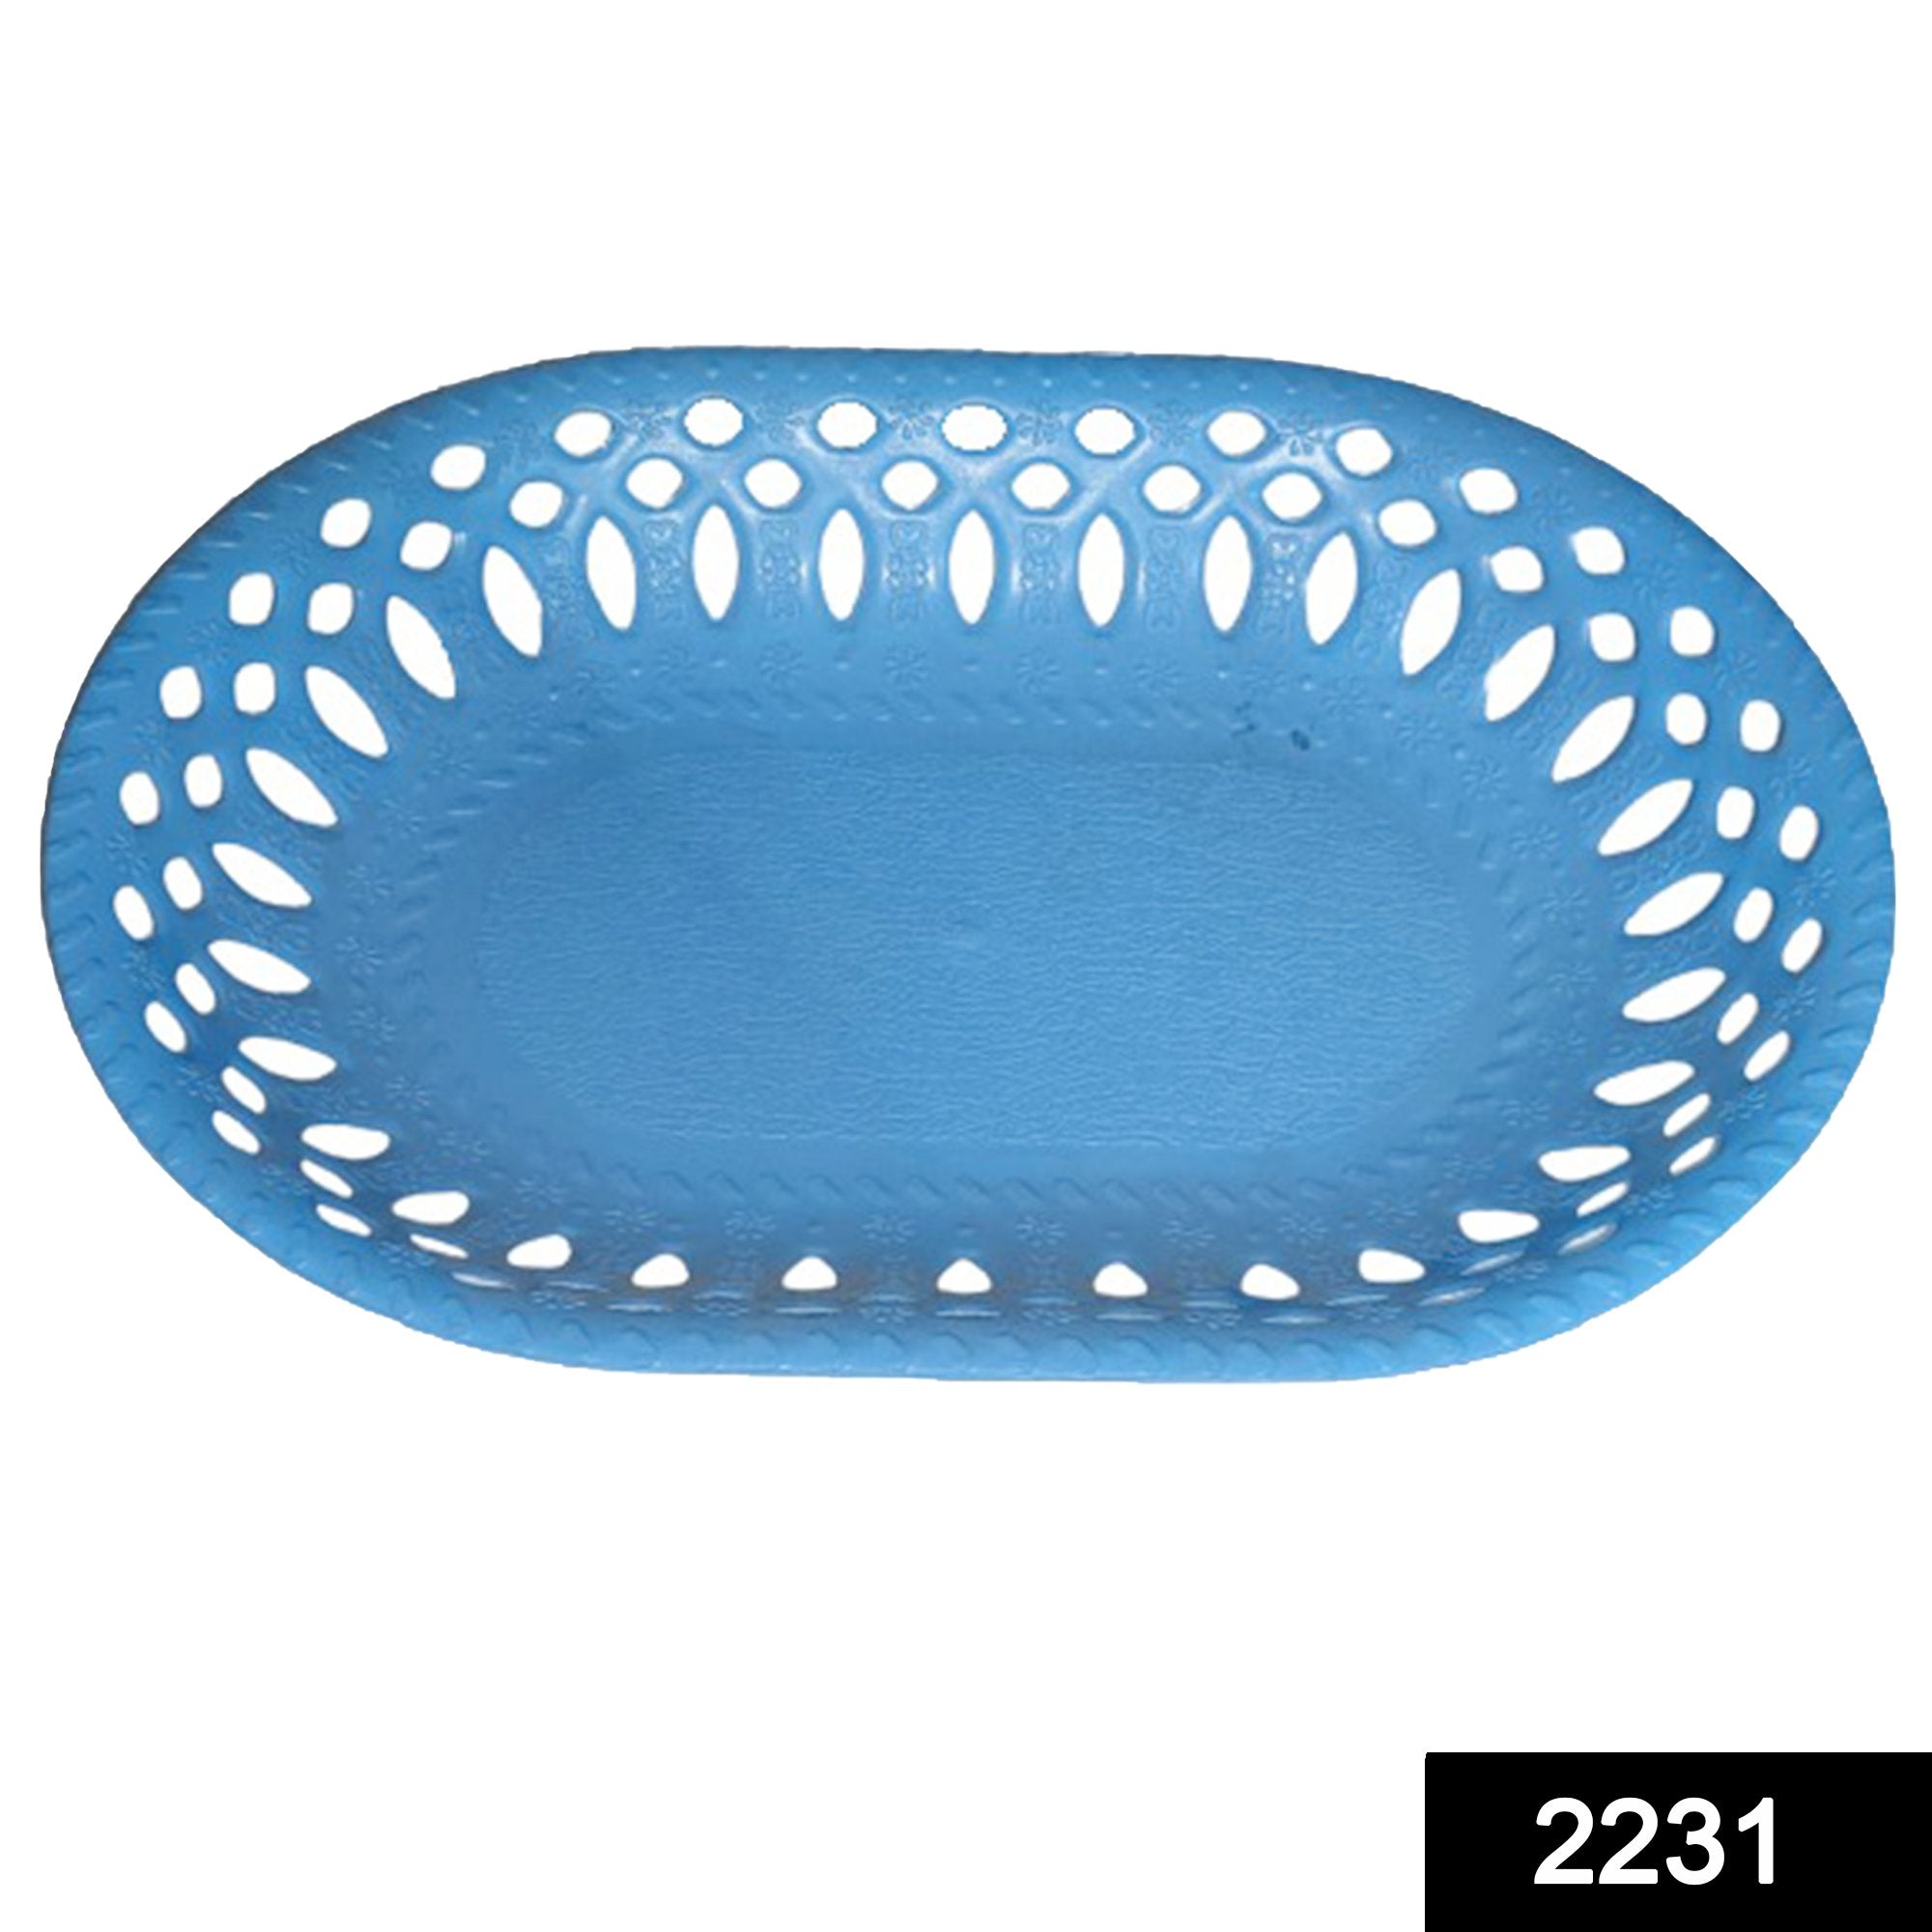 2231 plastic serving trays